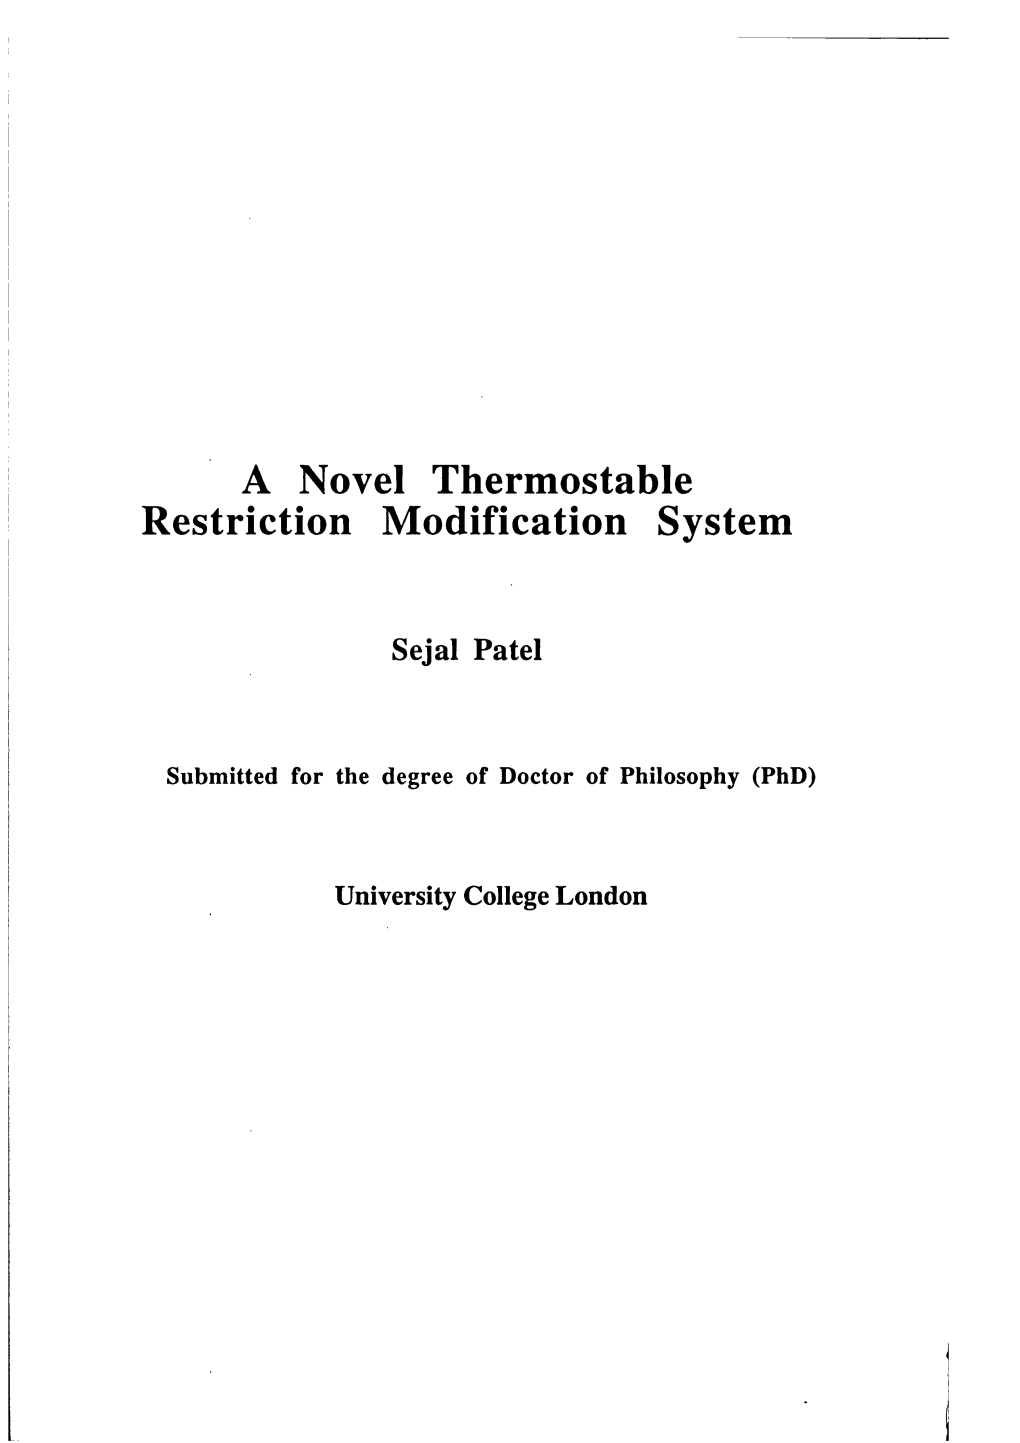 A Novel Thermostable Restriction Modification System